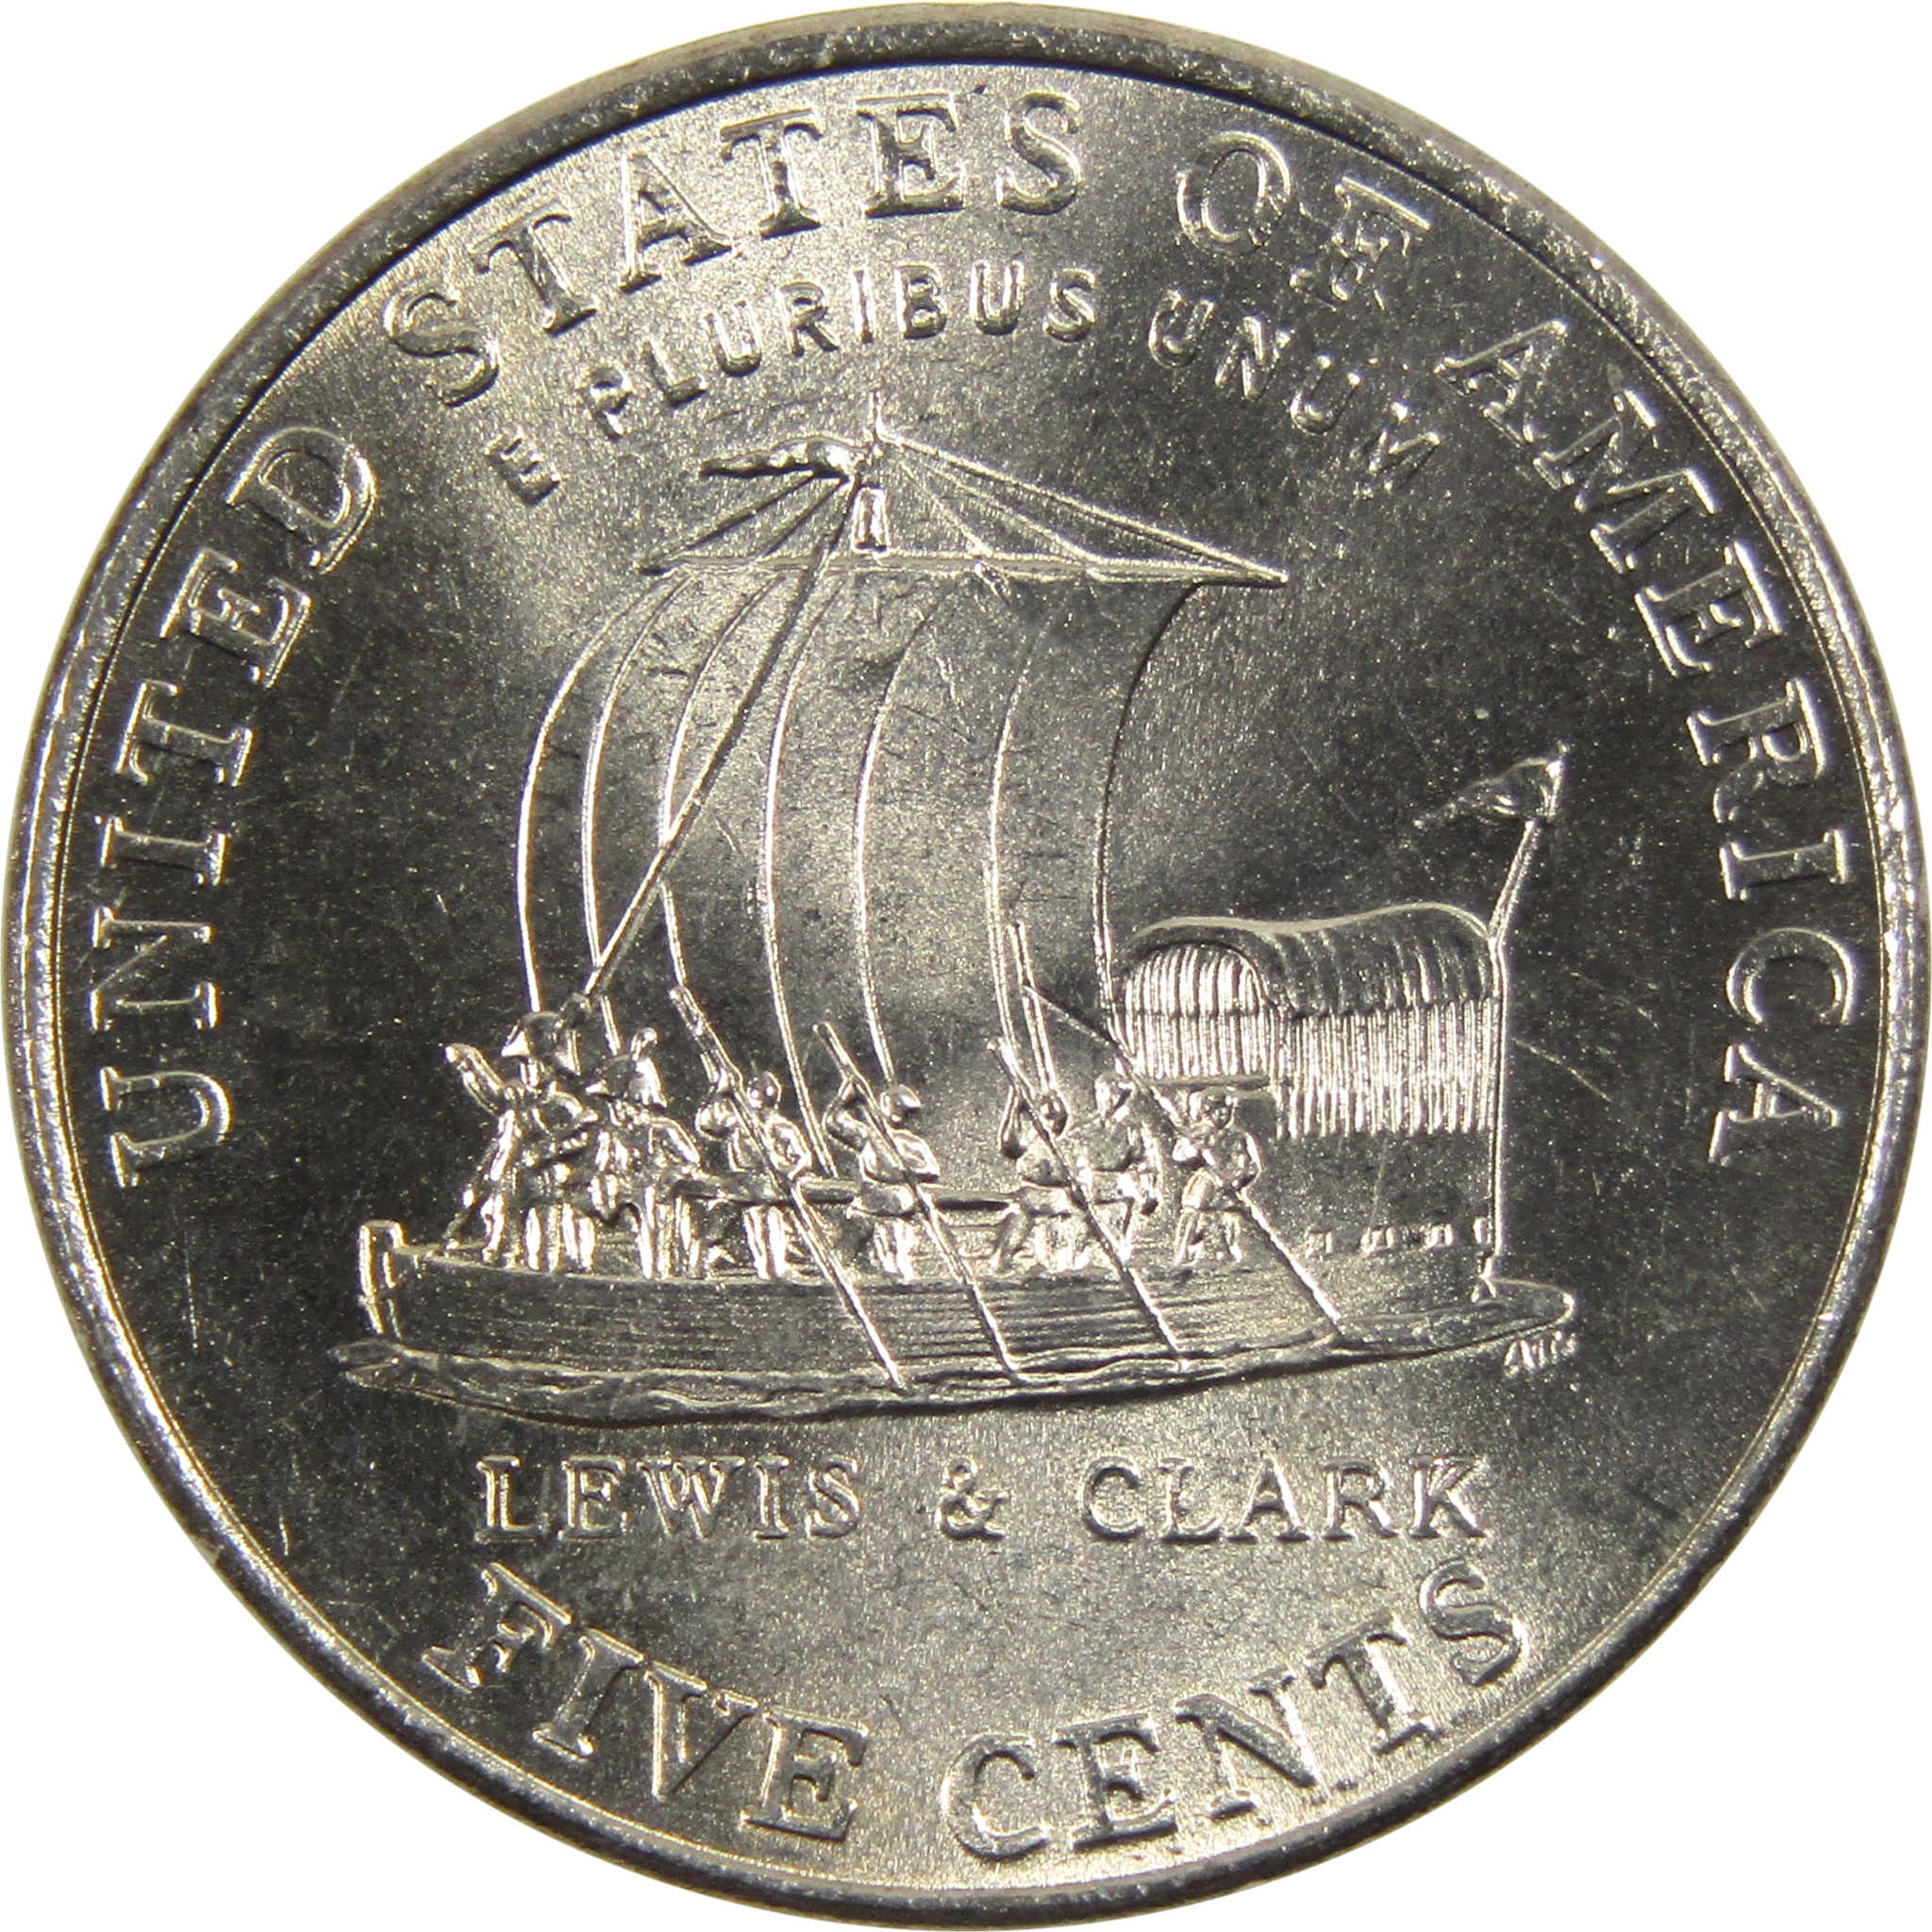 2004 P Keelboat Jefferson Nickel BU Uncirculated 5c Coin